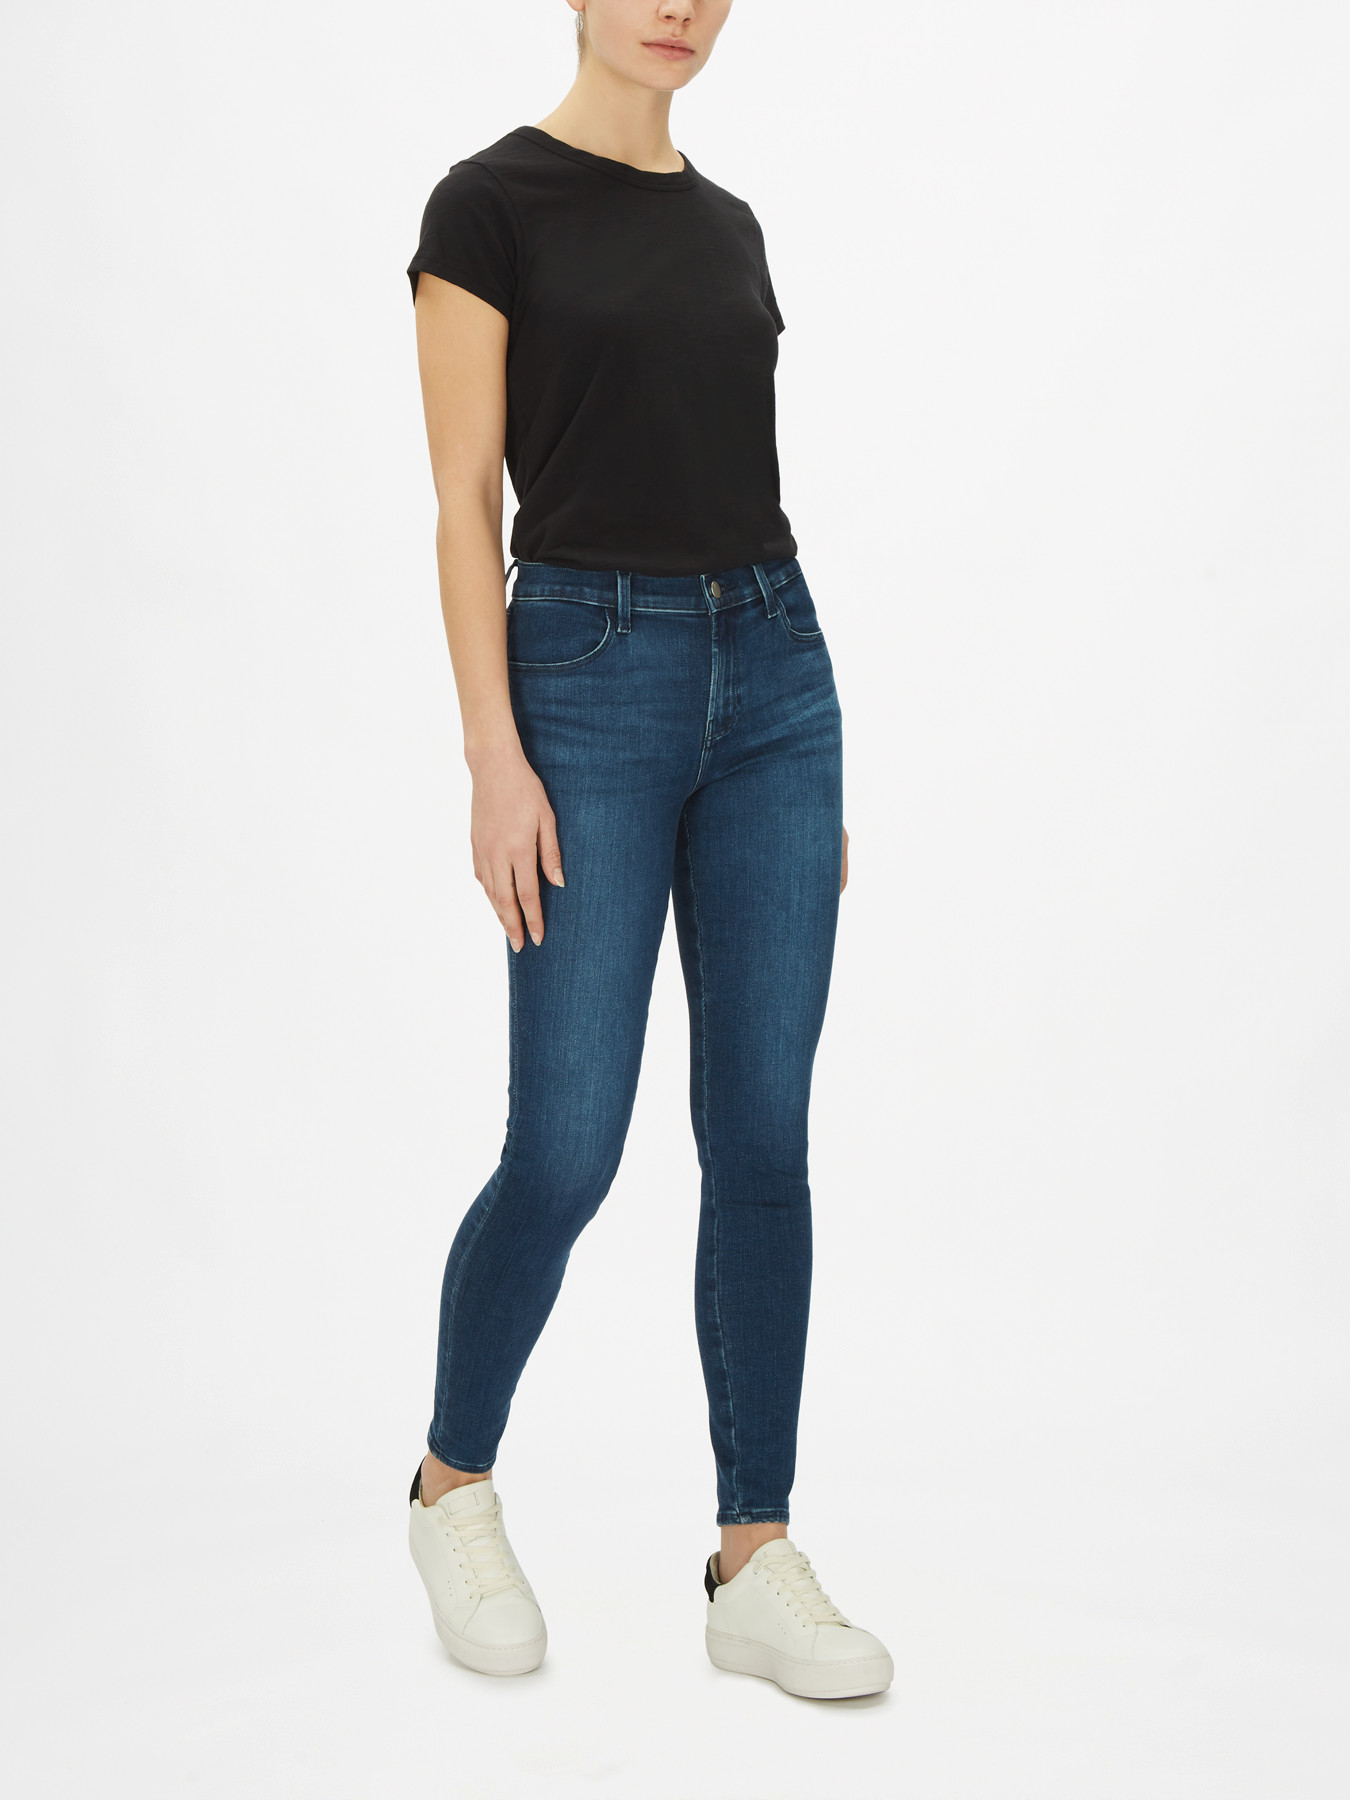 J Brand Sophia Mid Rise Super Skinny Jeans | Skinny | Fenwick